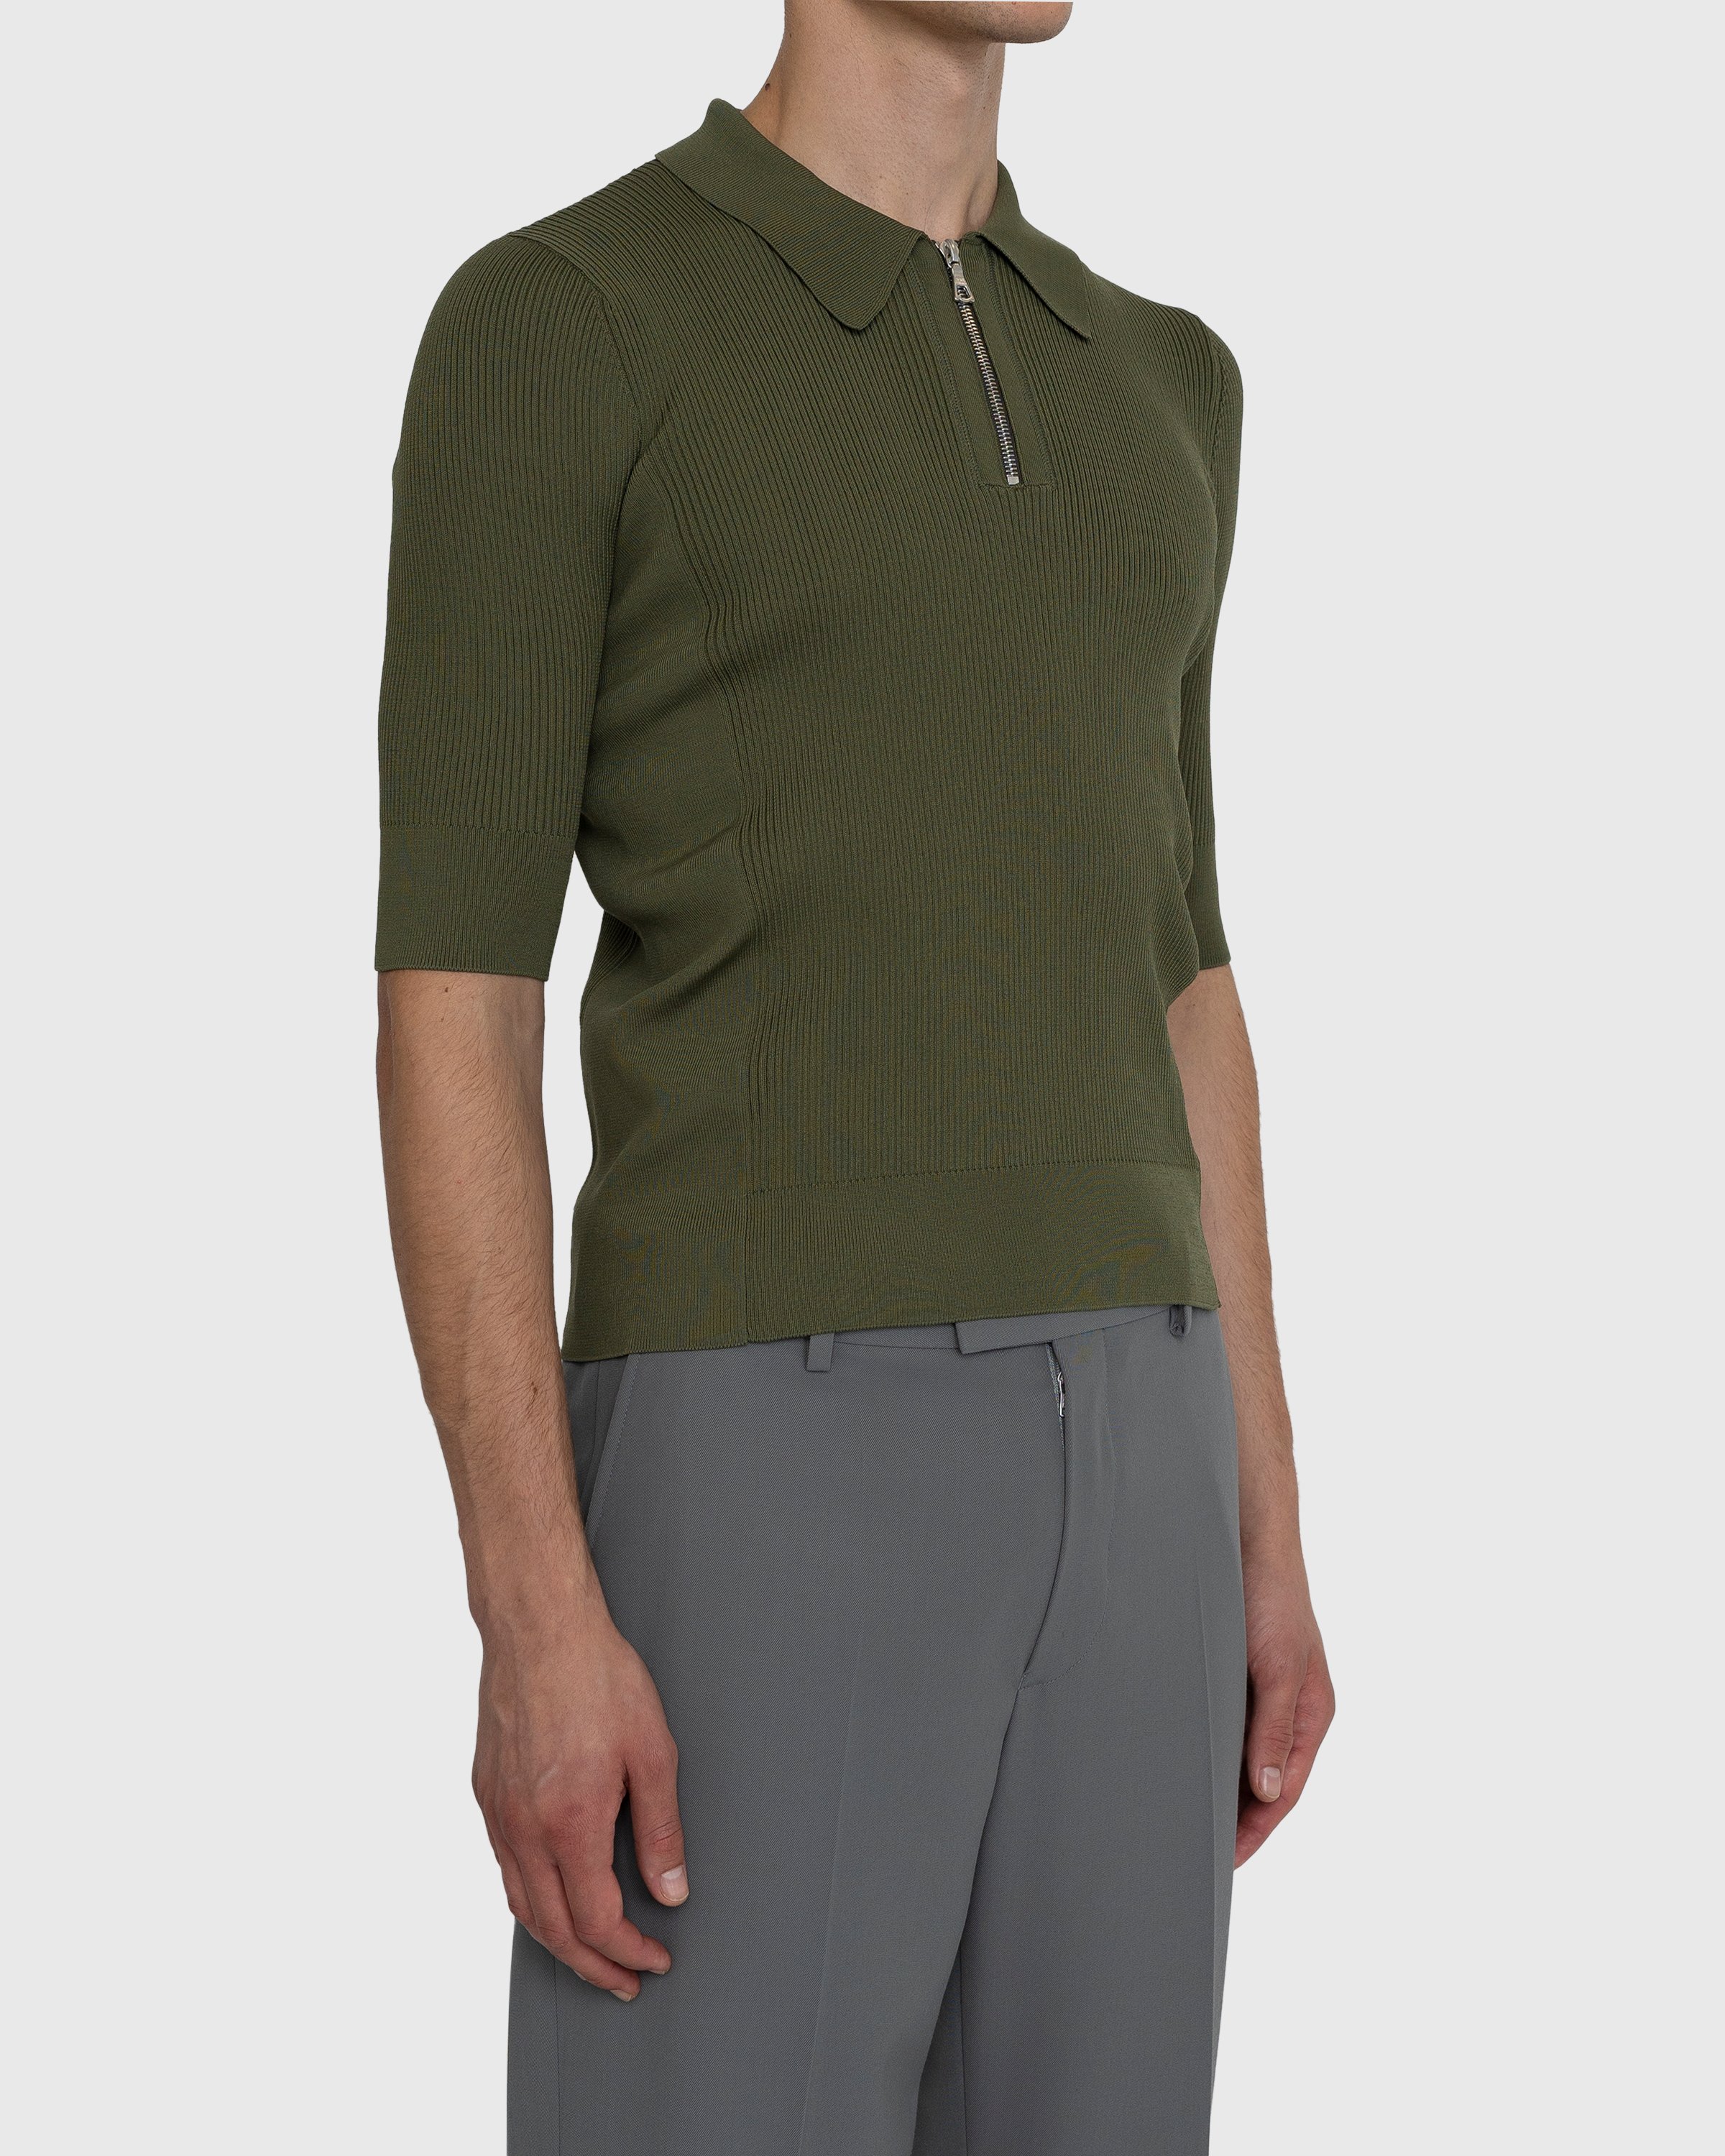 Dries van Noten - Neil Sweater - Clothing - Green - Image 3